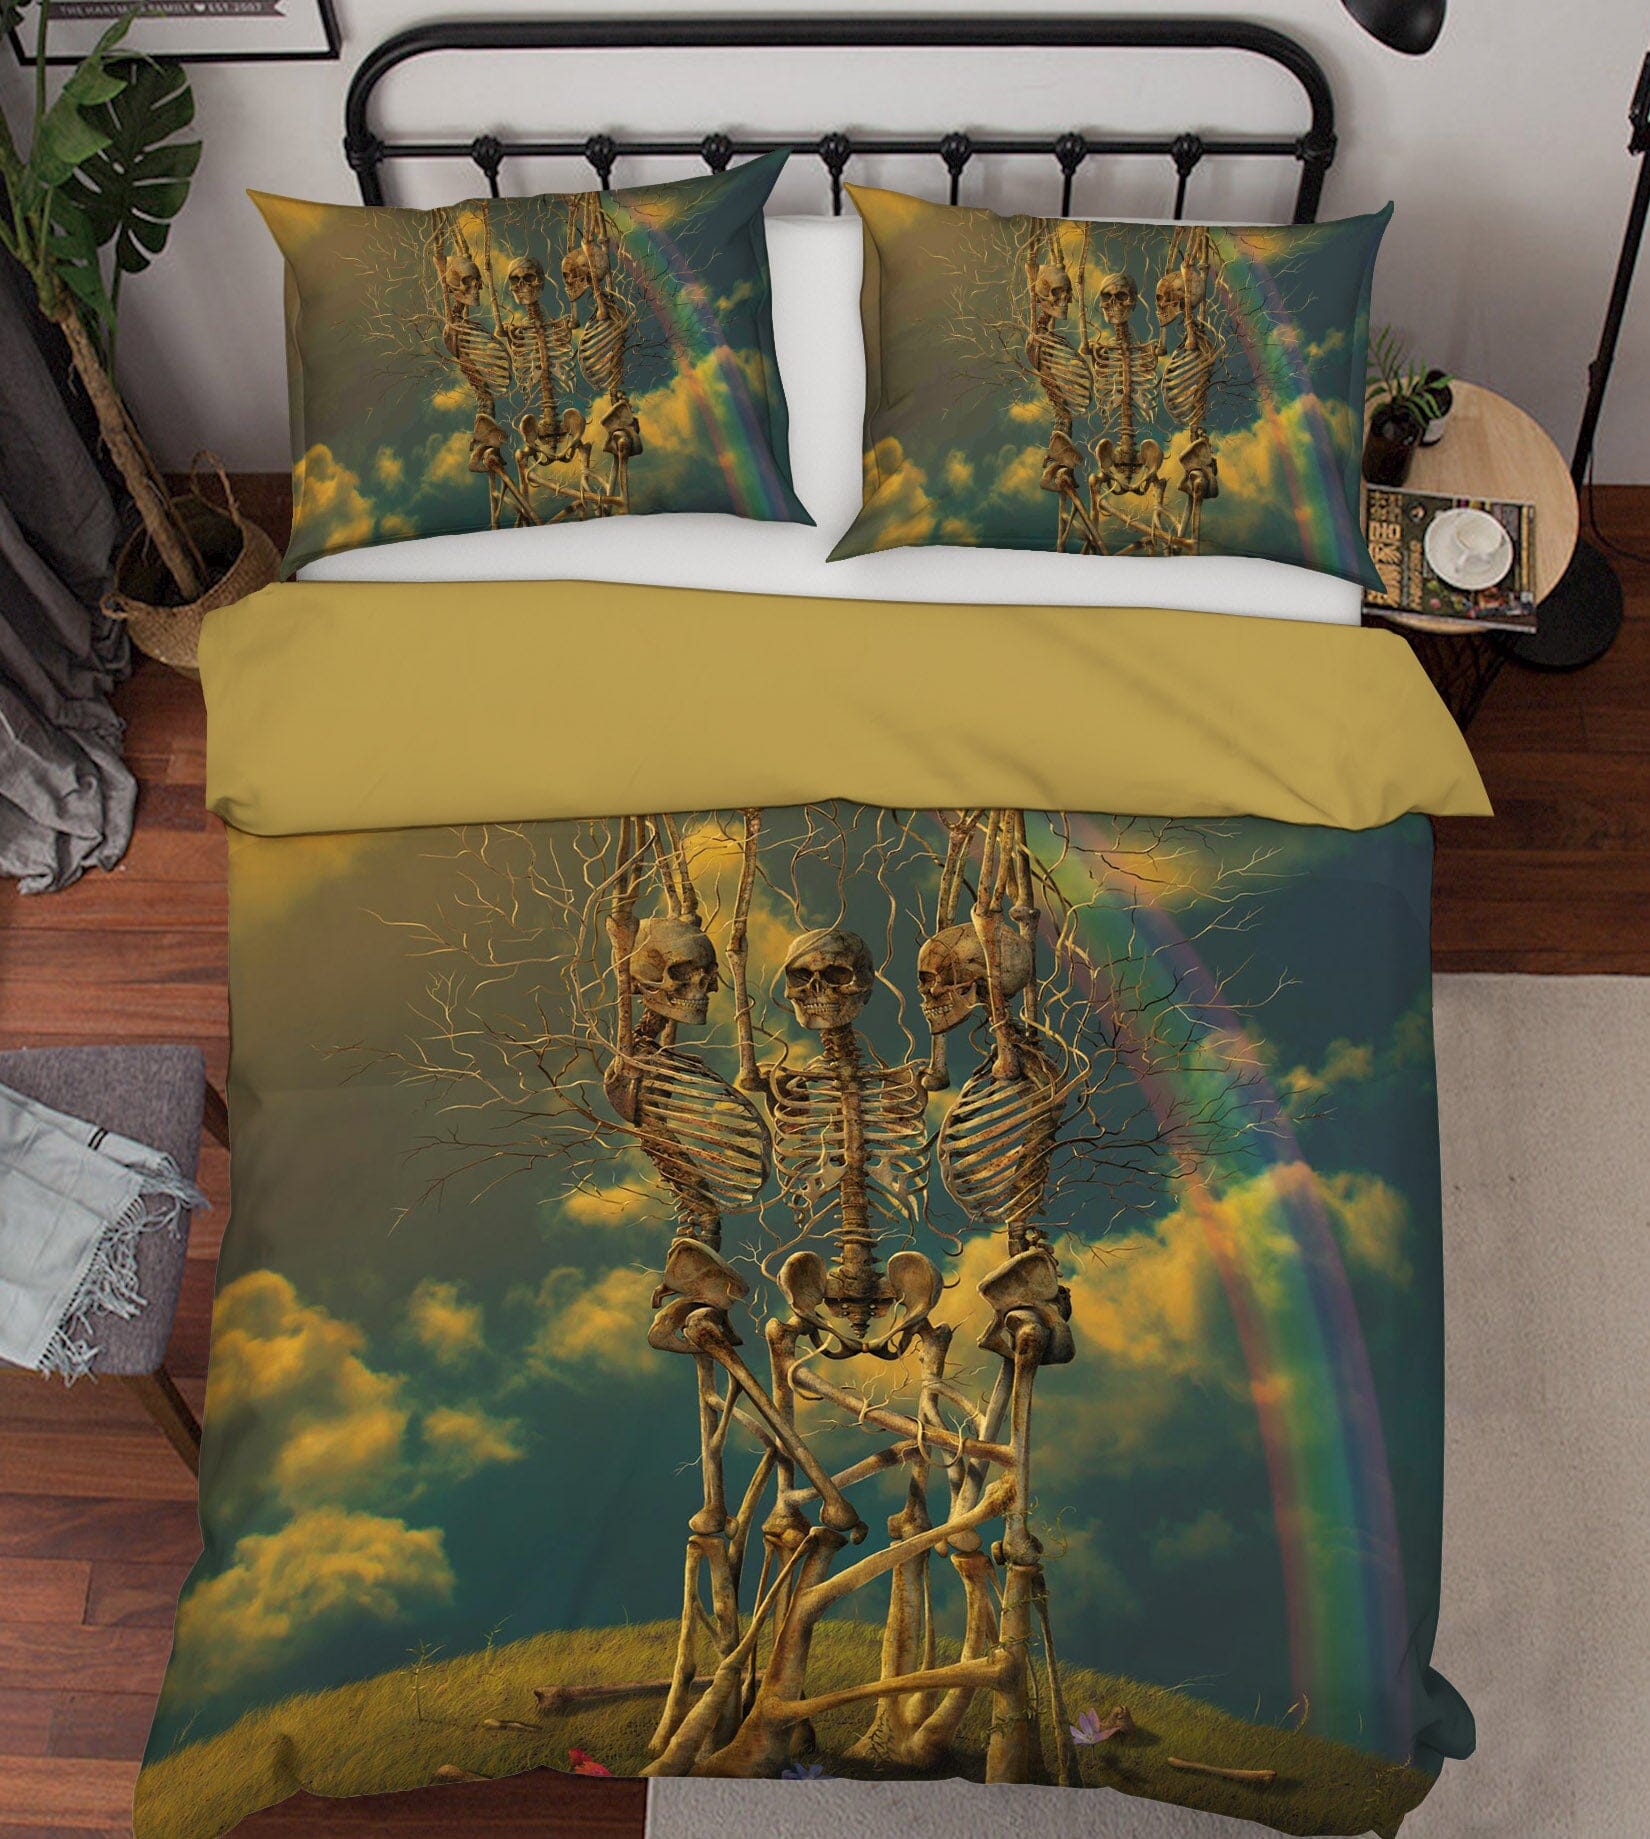 3D Life Cycle 056 Bed Pillowcases Quilt Exclusive Designer Vincent Quiet Covers AJ Creativity Home 